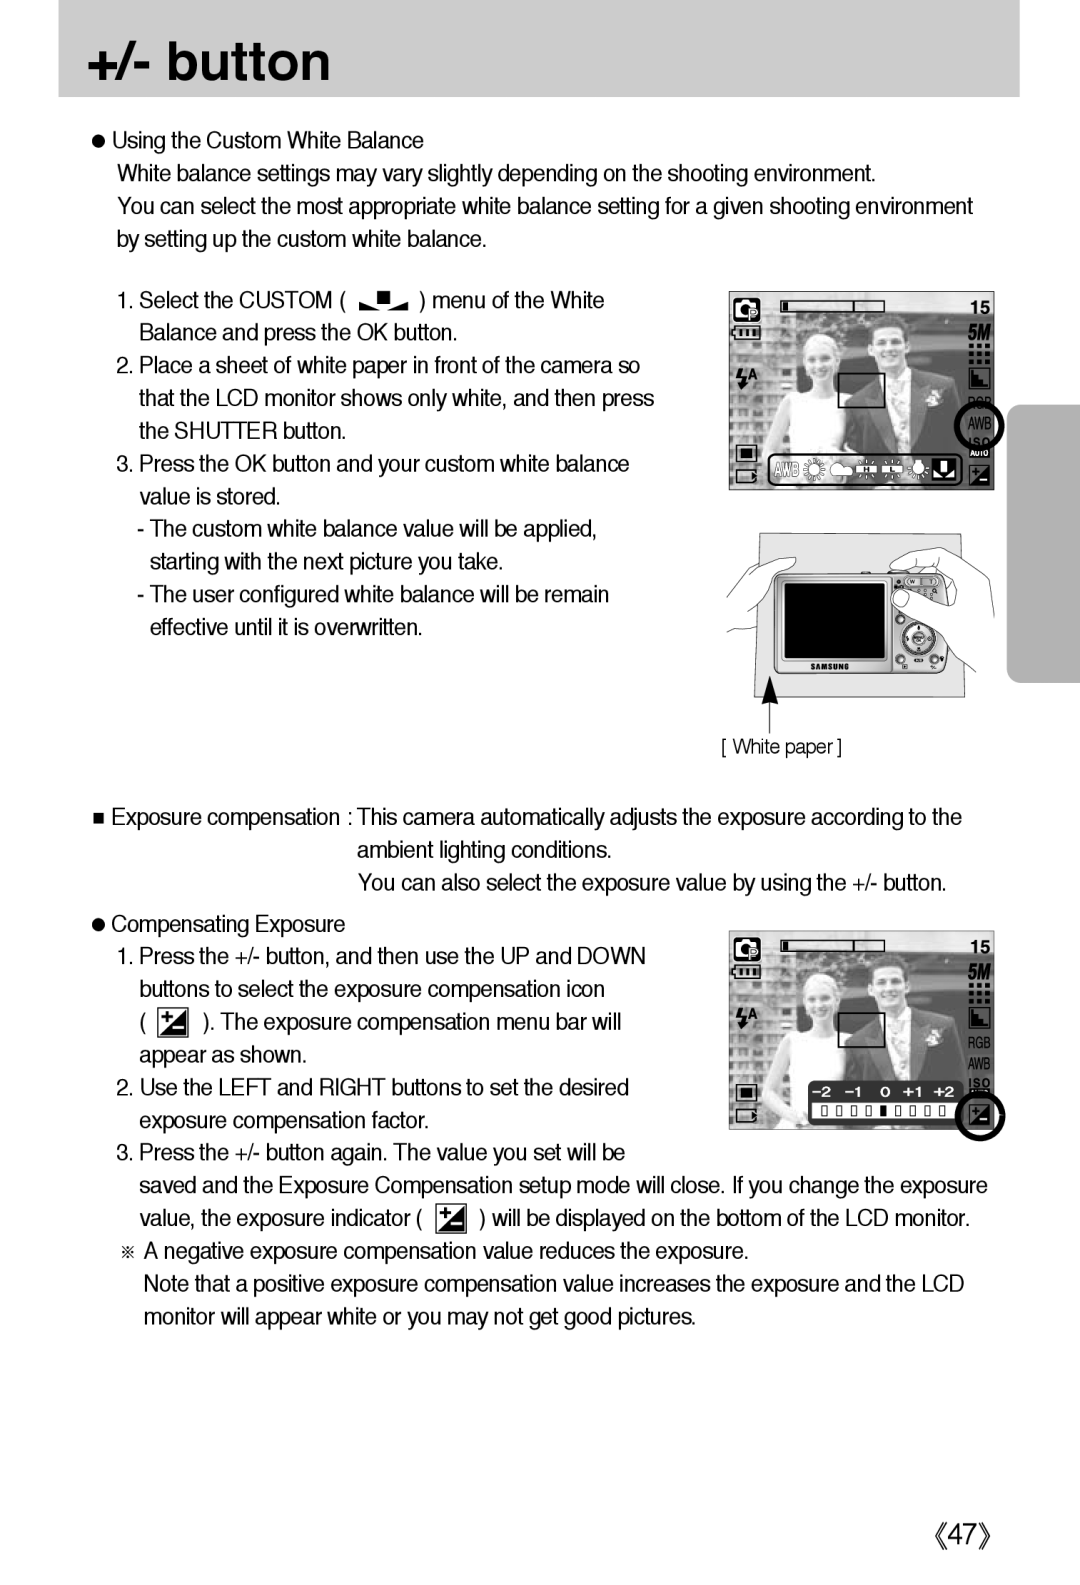 Samsung L50 user manual 《47》, +/- button 